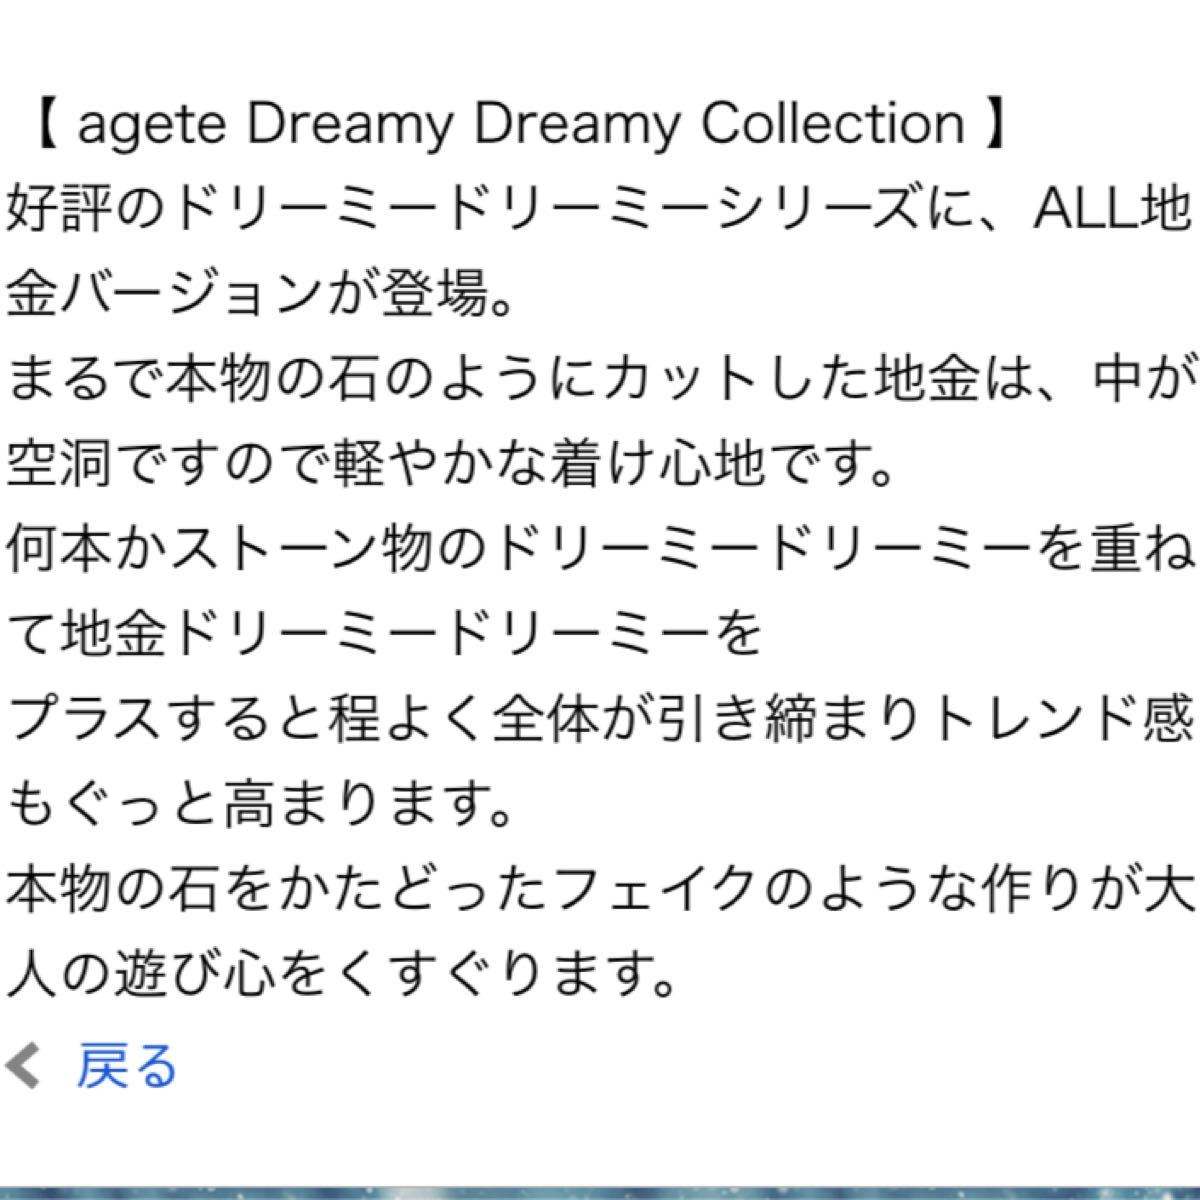 agete アガット dreamy dreamy collection ブレスレット ALL地金タイプ